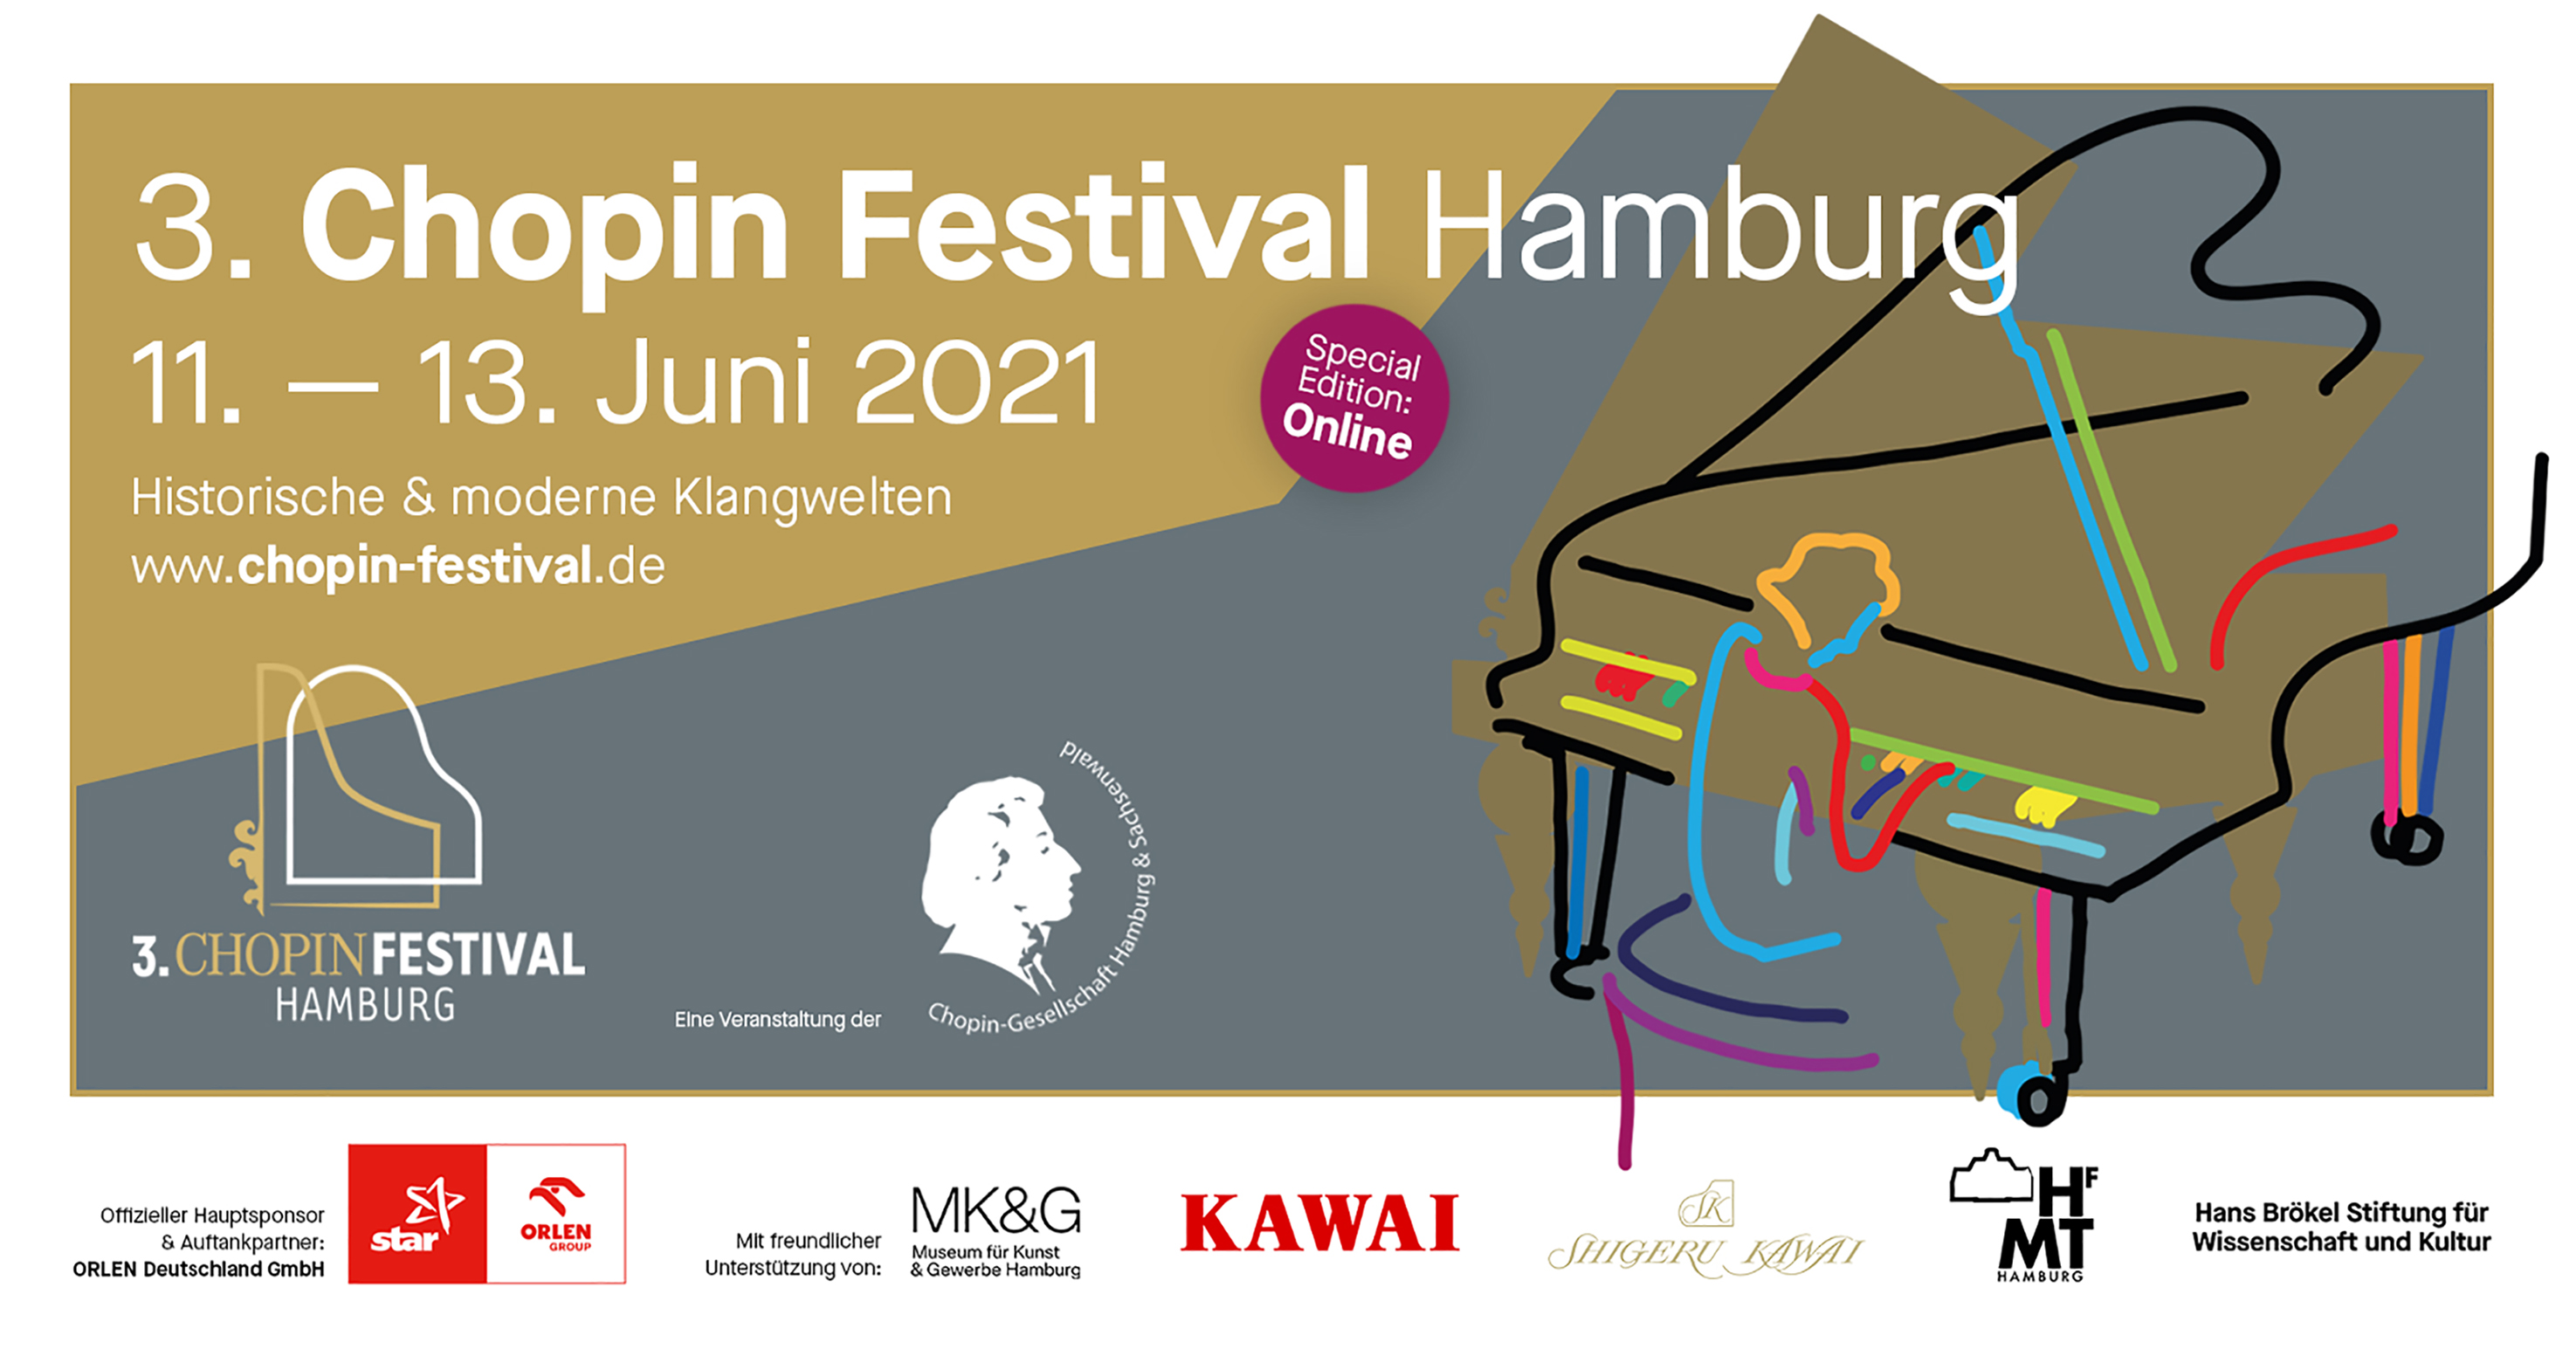 star ORLEN_Drittes Chopin-Festival als “Special Edition”.jpg